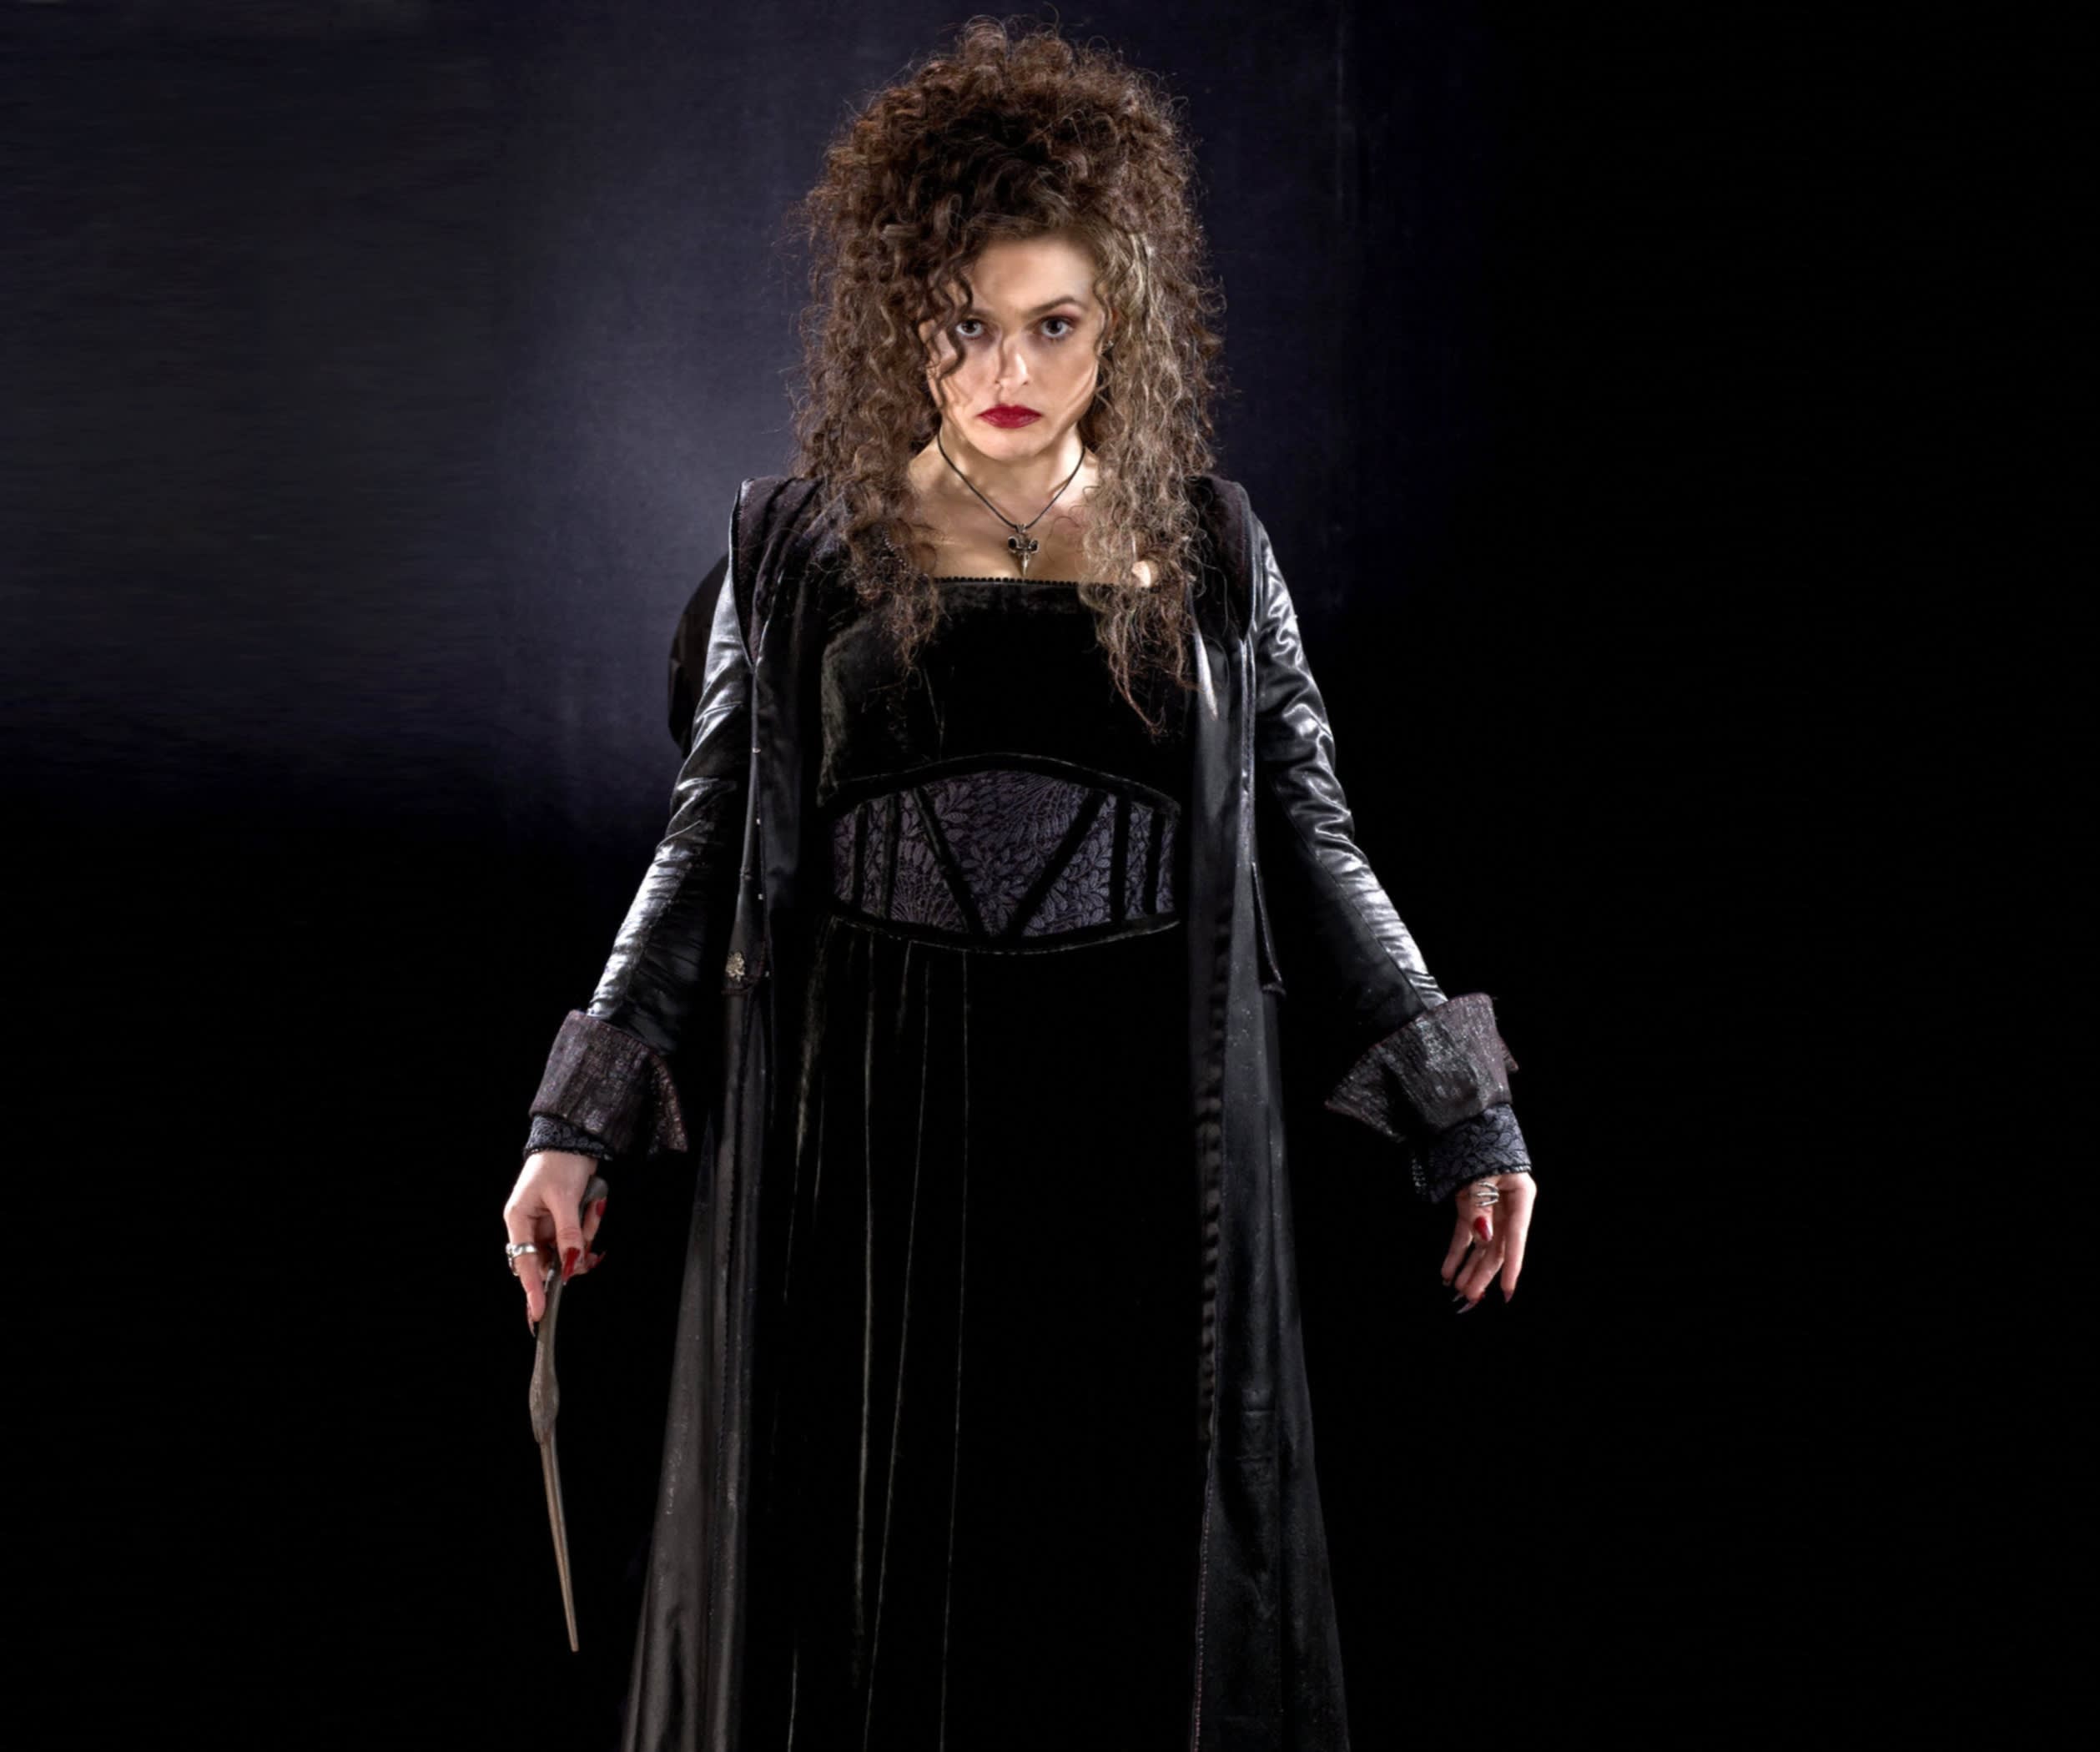 Bellatrix Lestrange fullbody shot from the Half Blood Prince